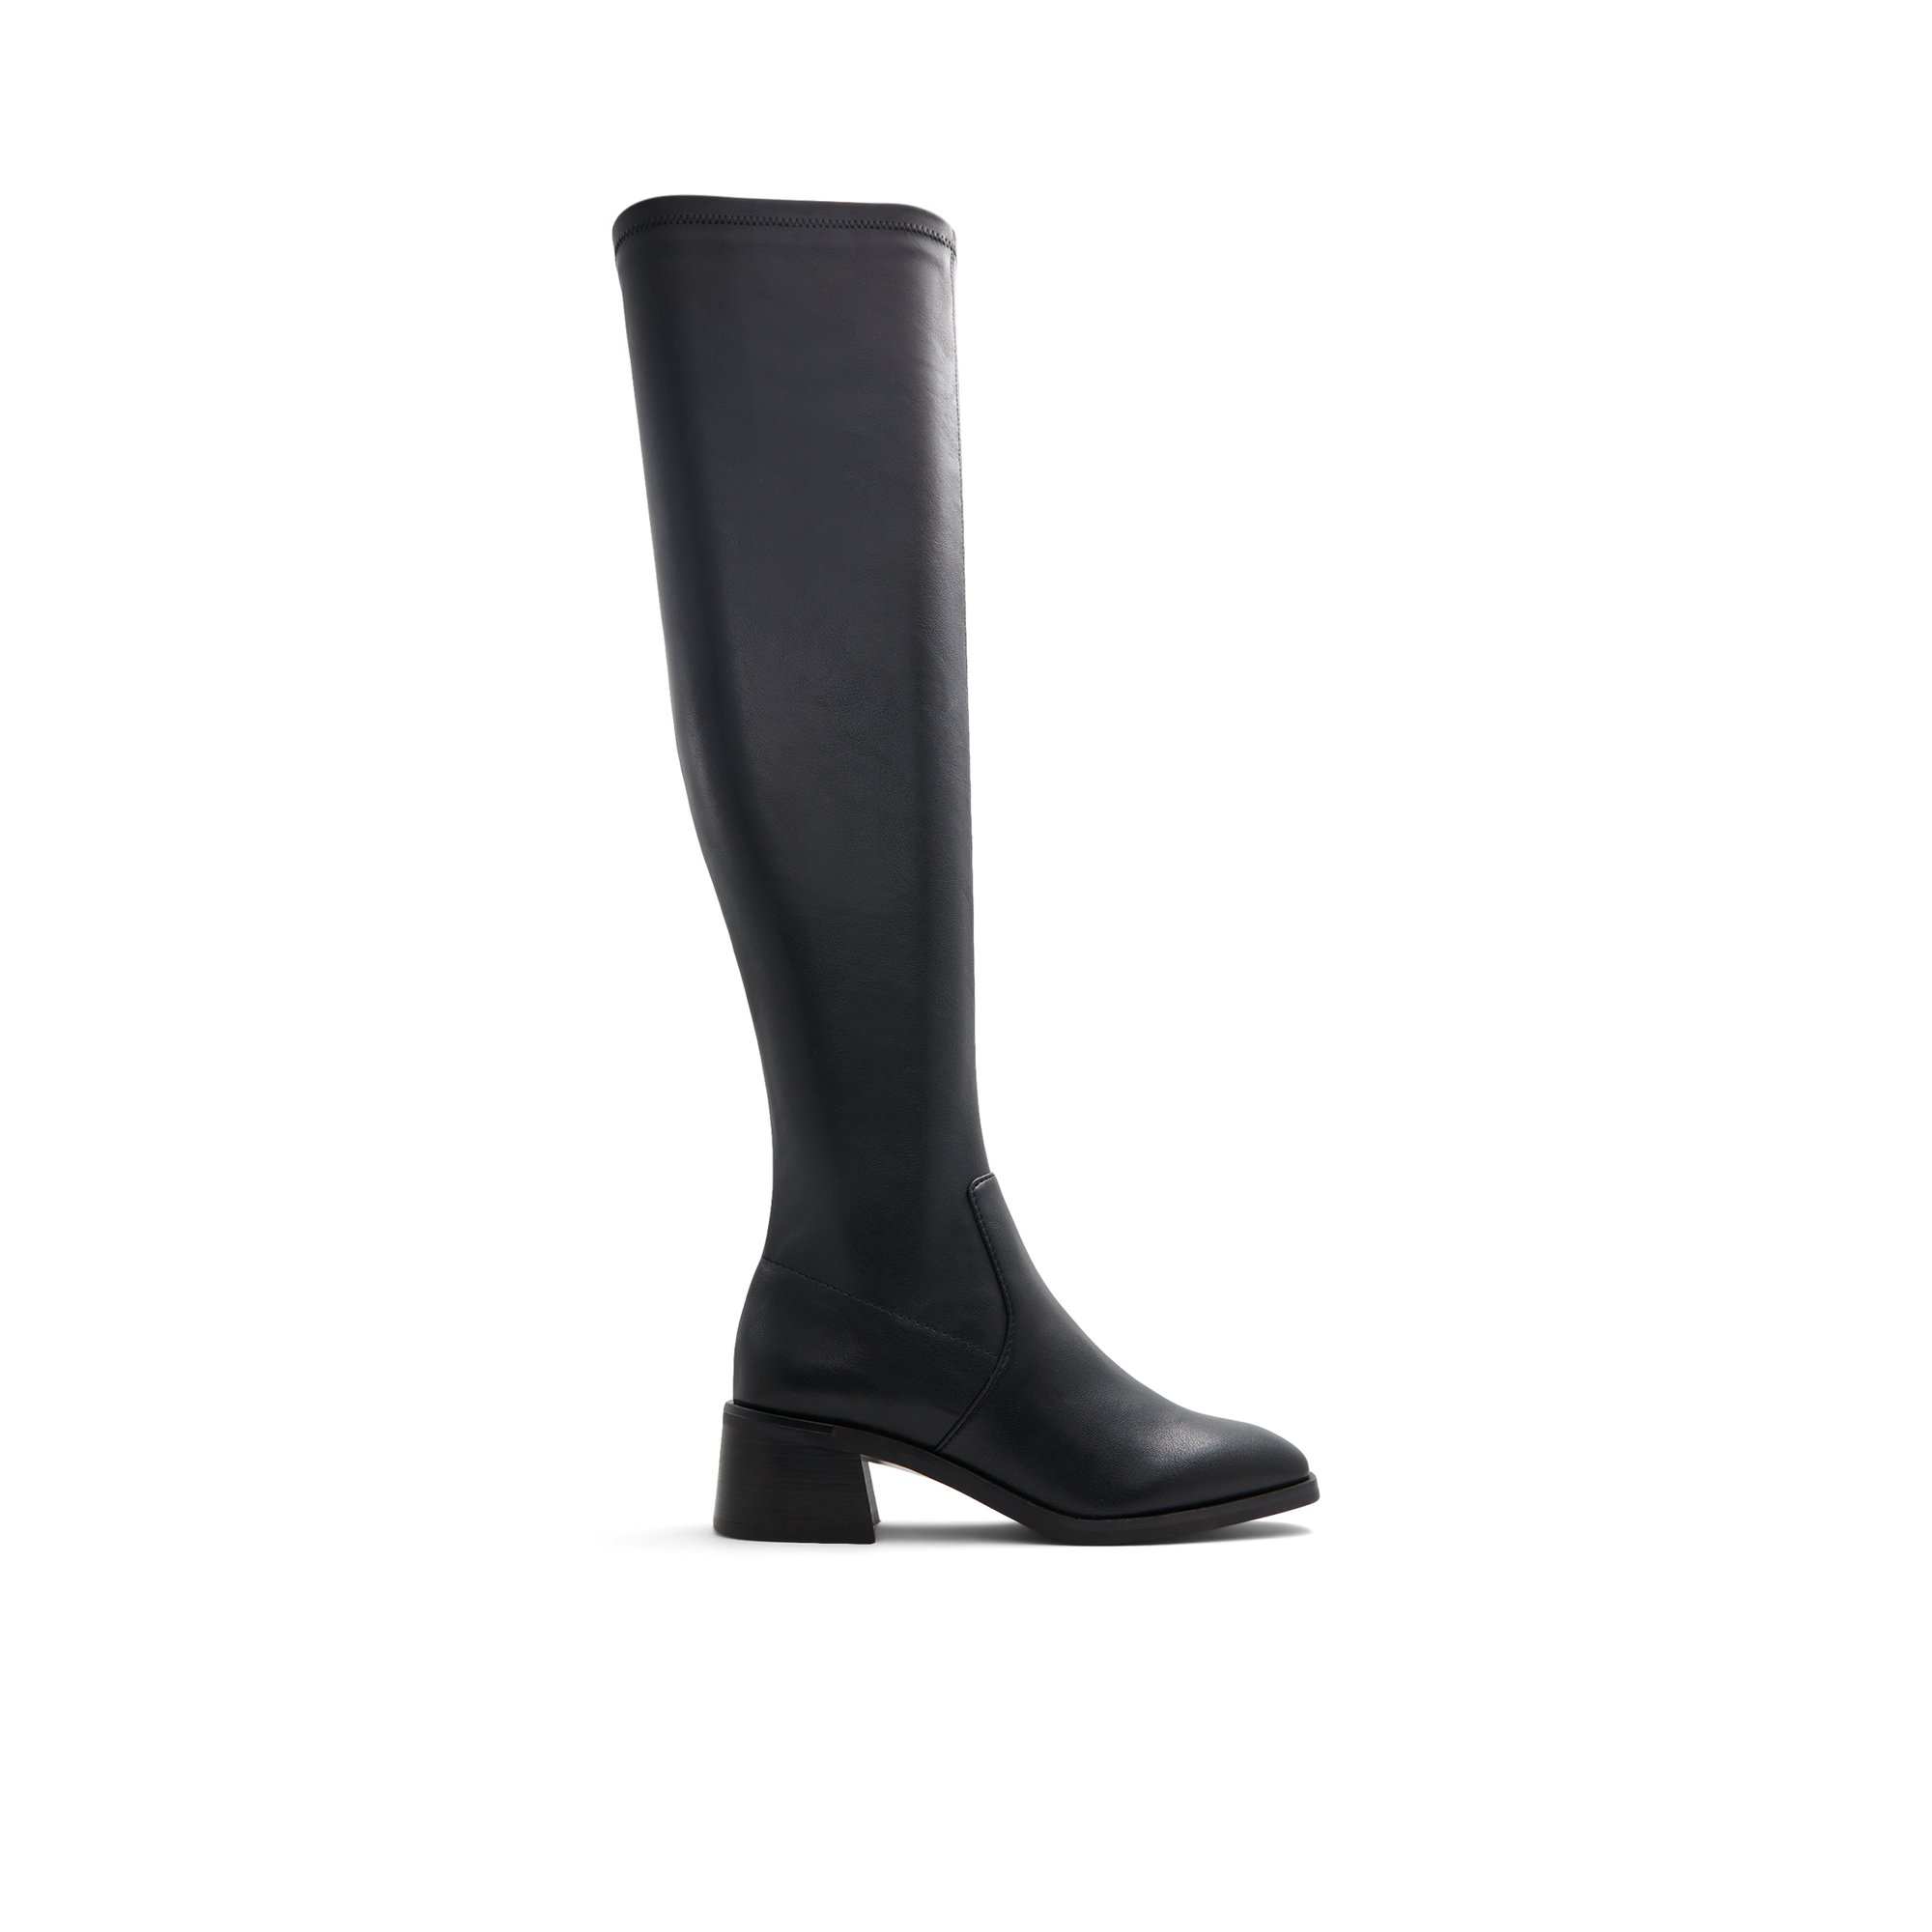 ALDO Miralemas - Women's Boots Tall - Black